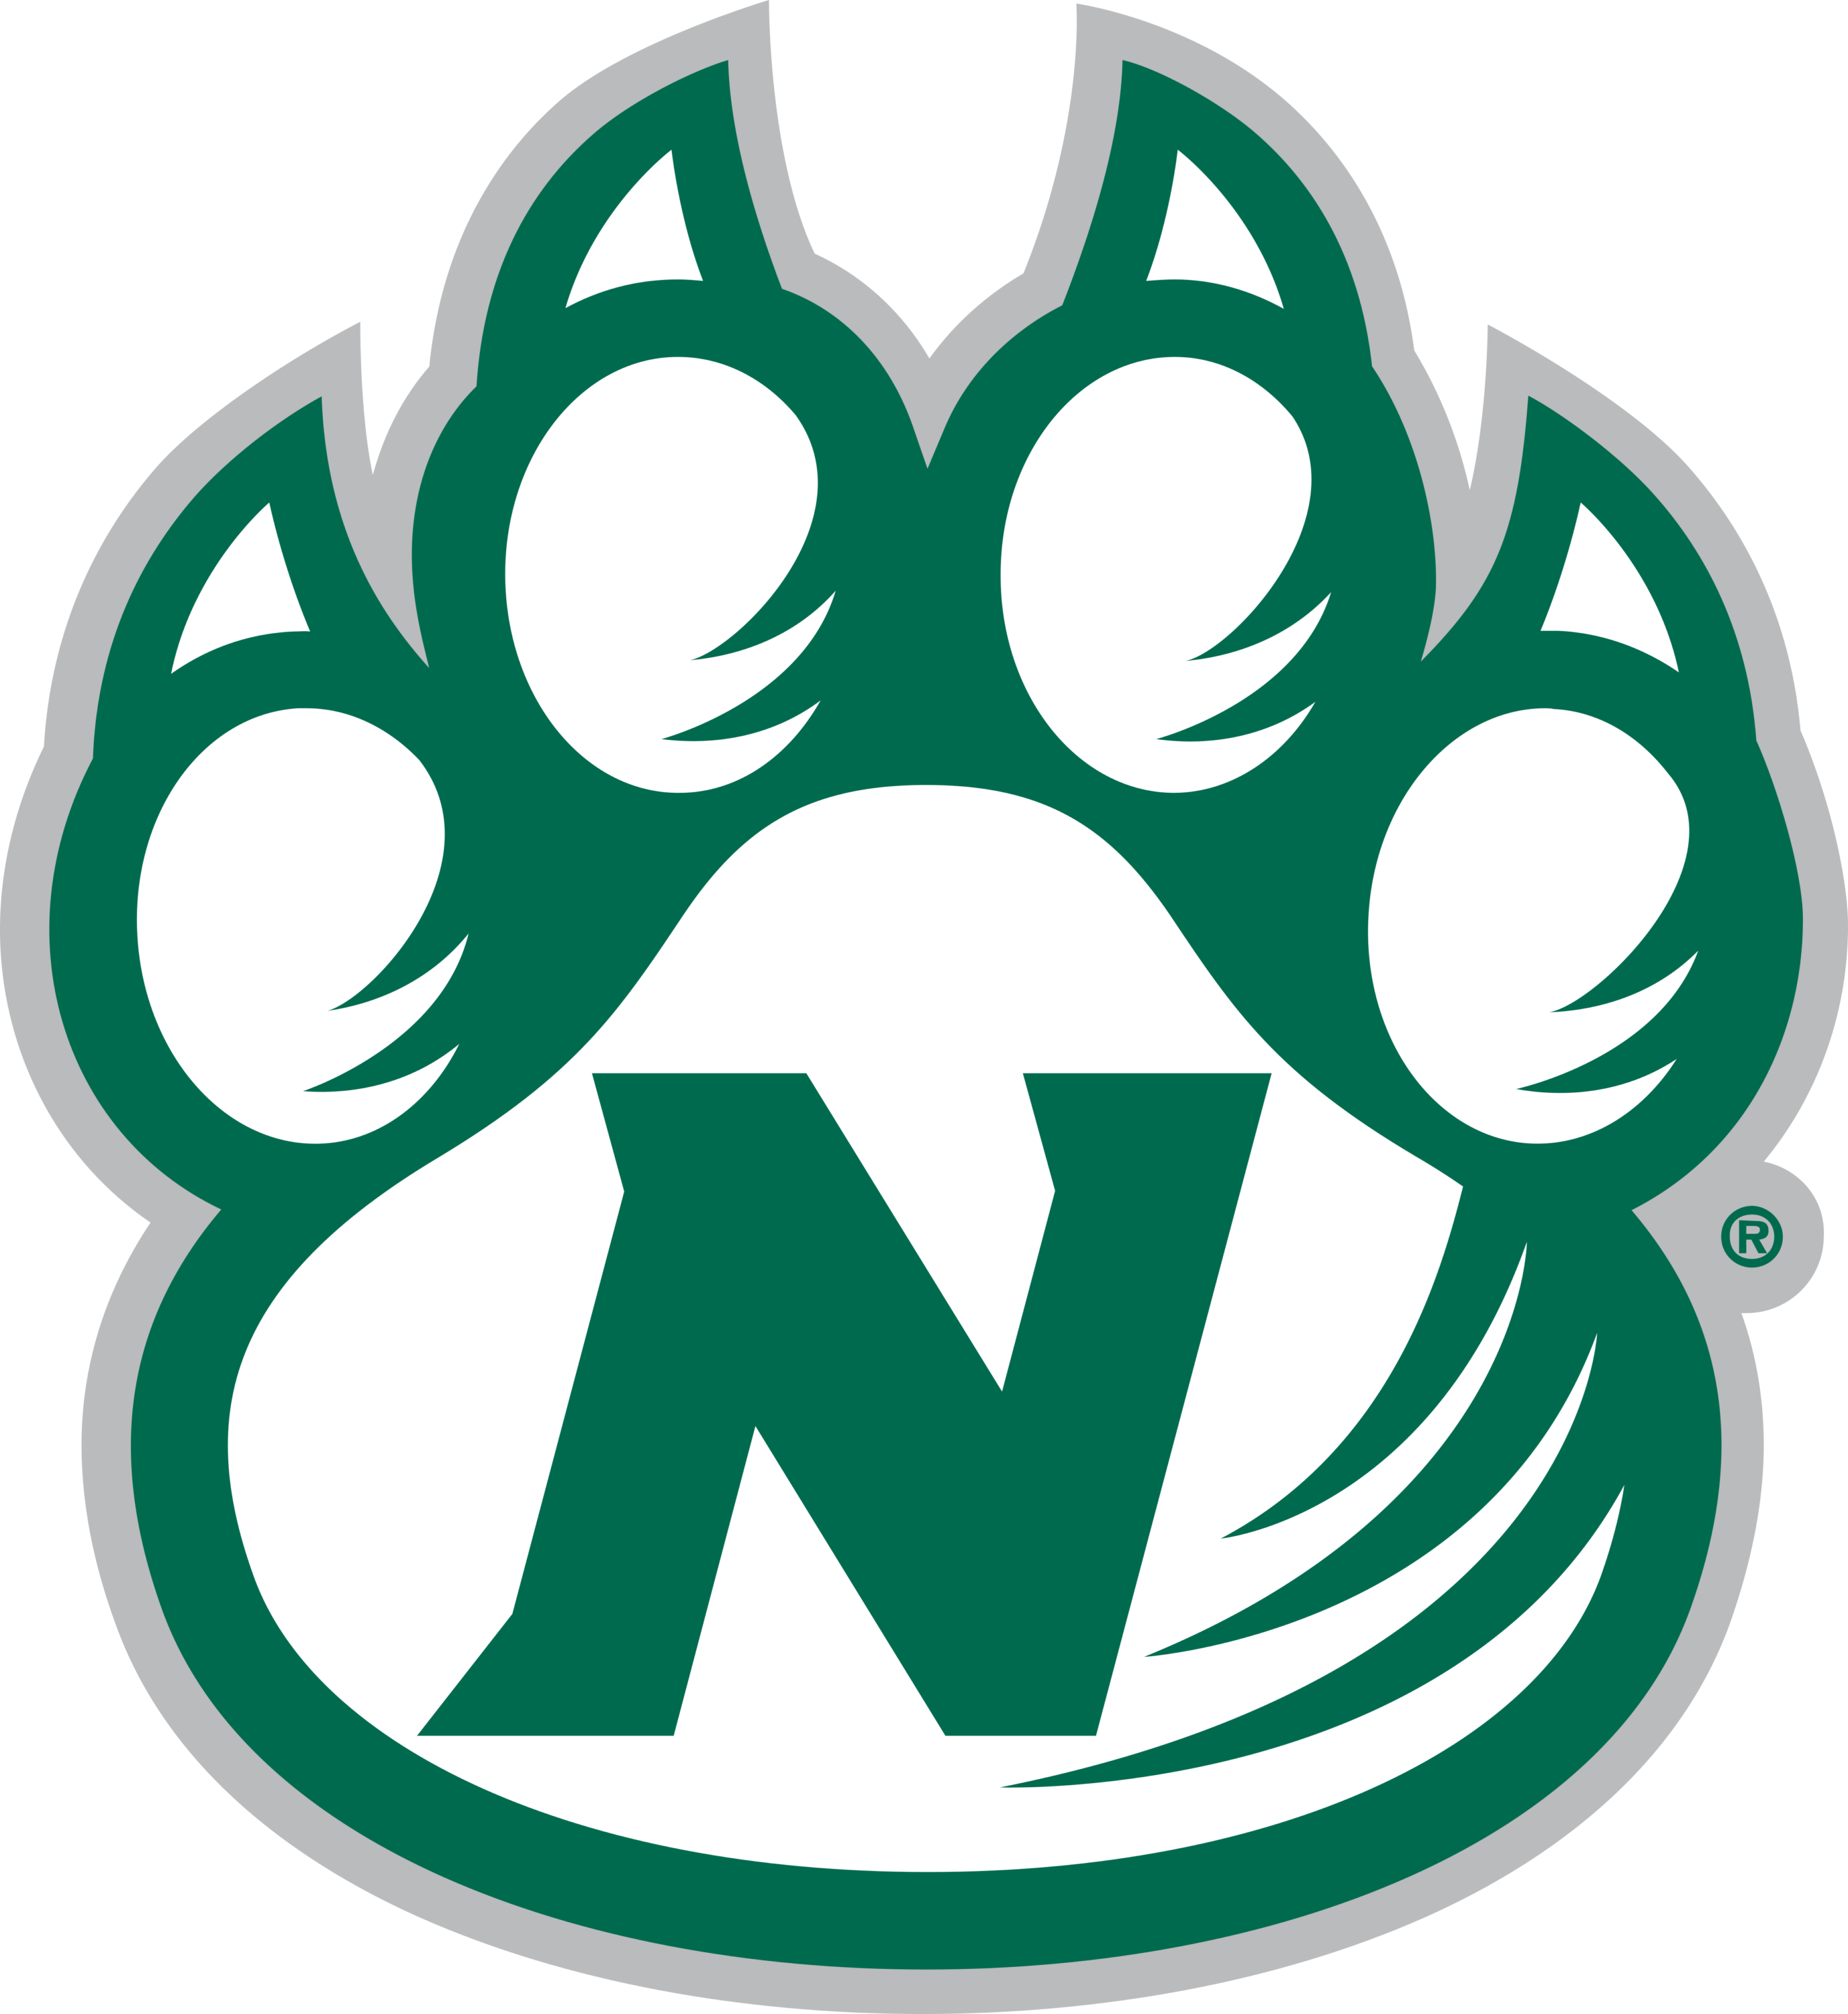 Northwest Missouri State Bearcats Logo